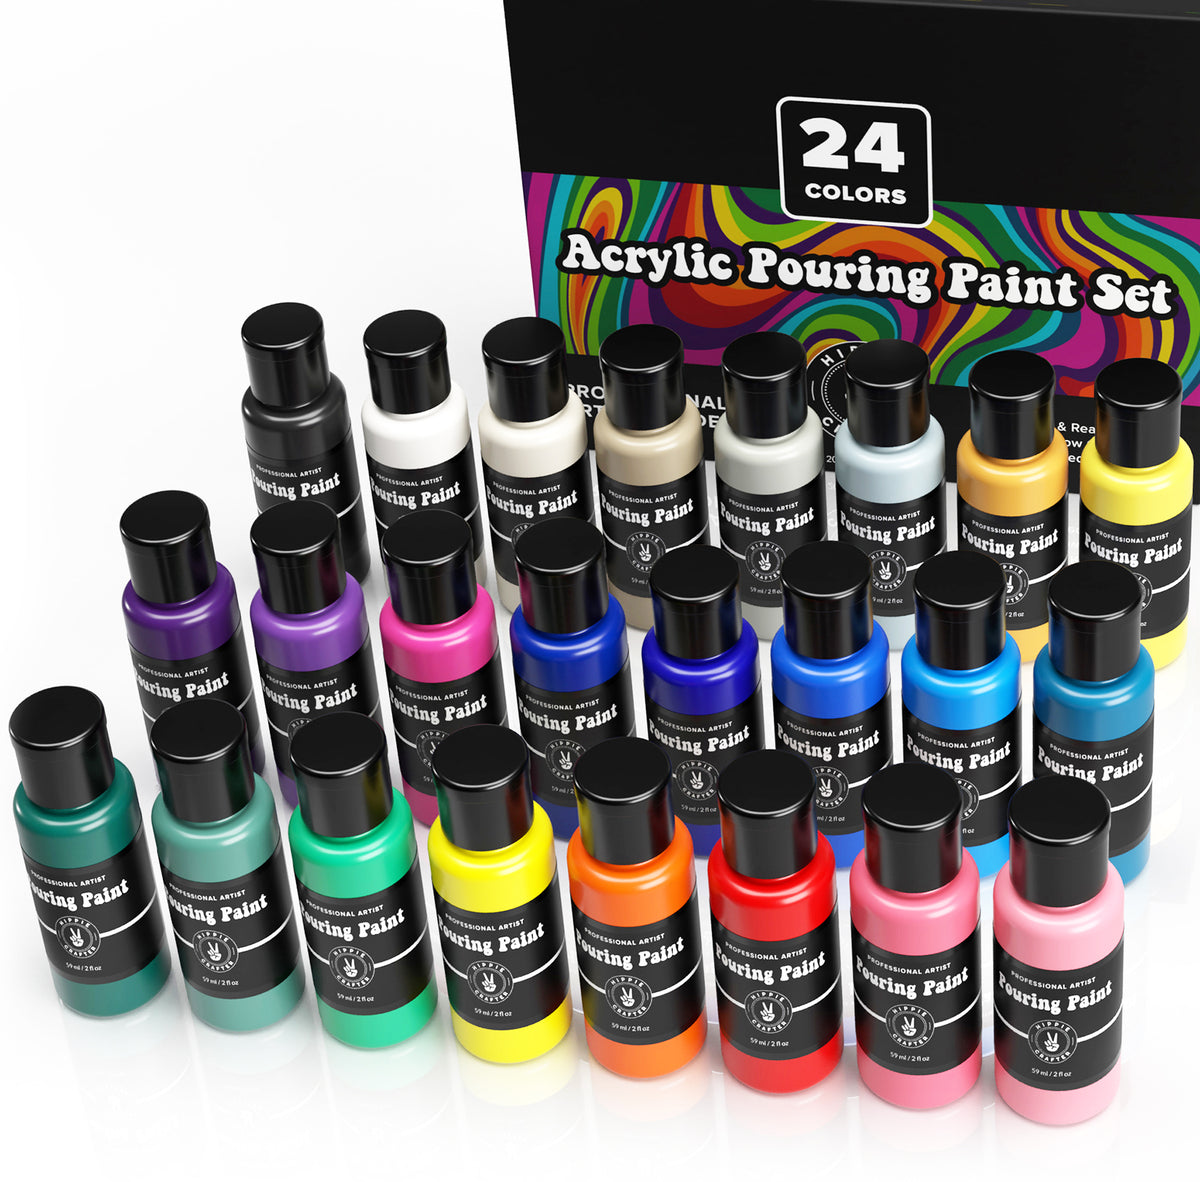 Classic Acrylic Pouring Paint - 24 Colors